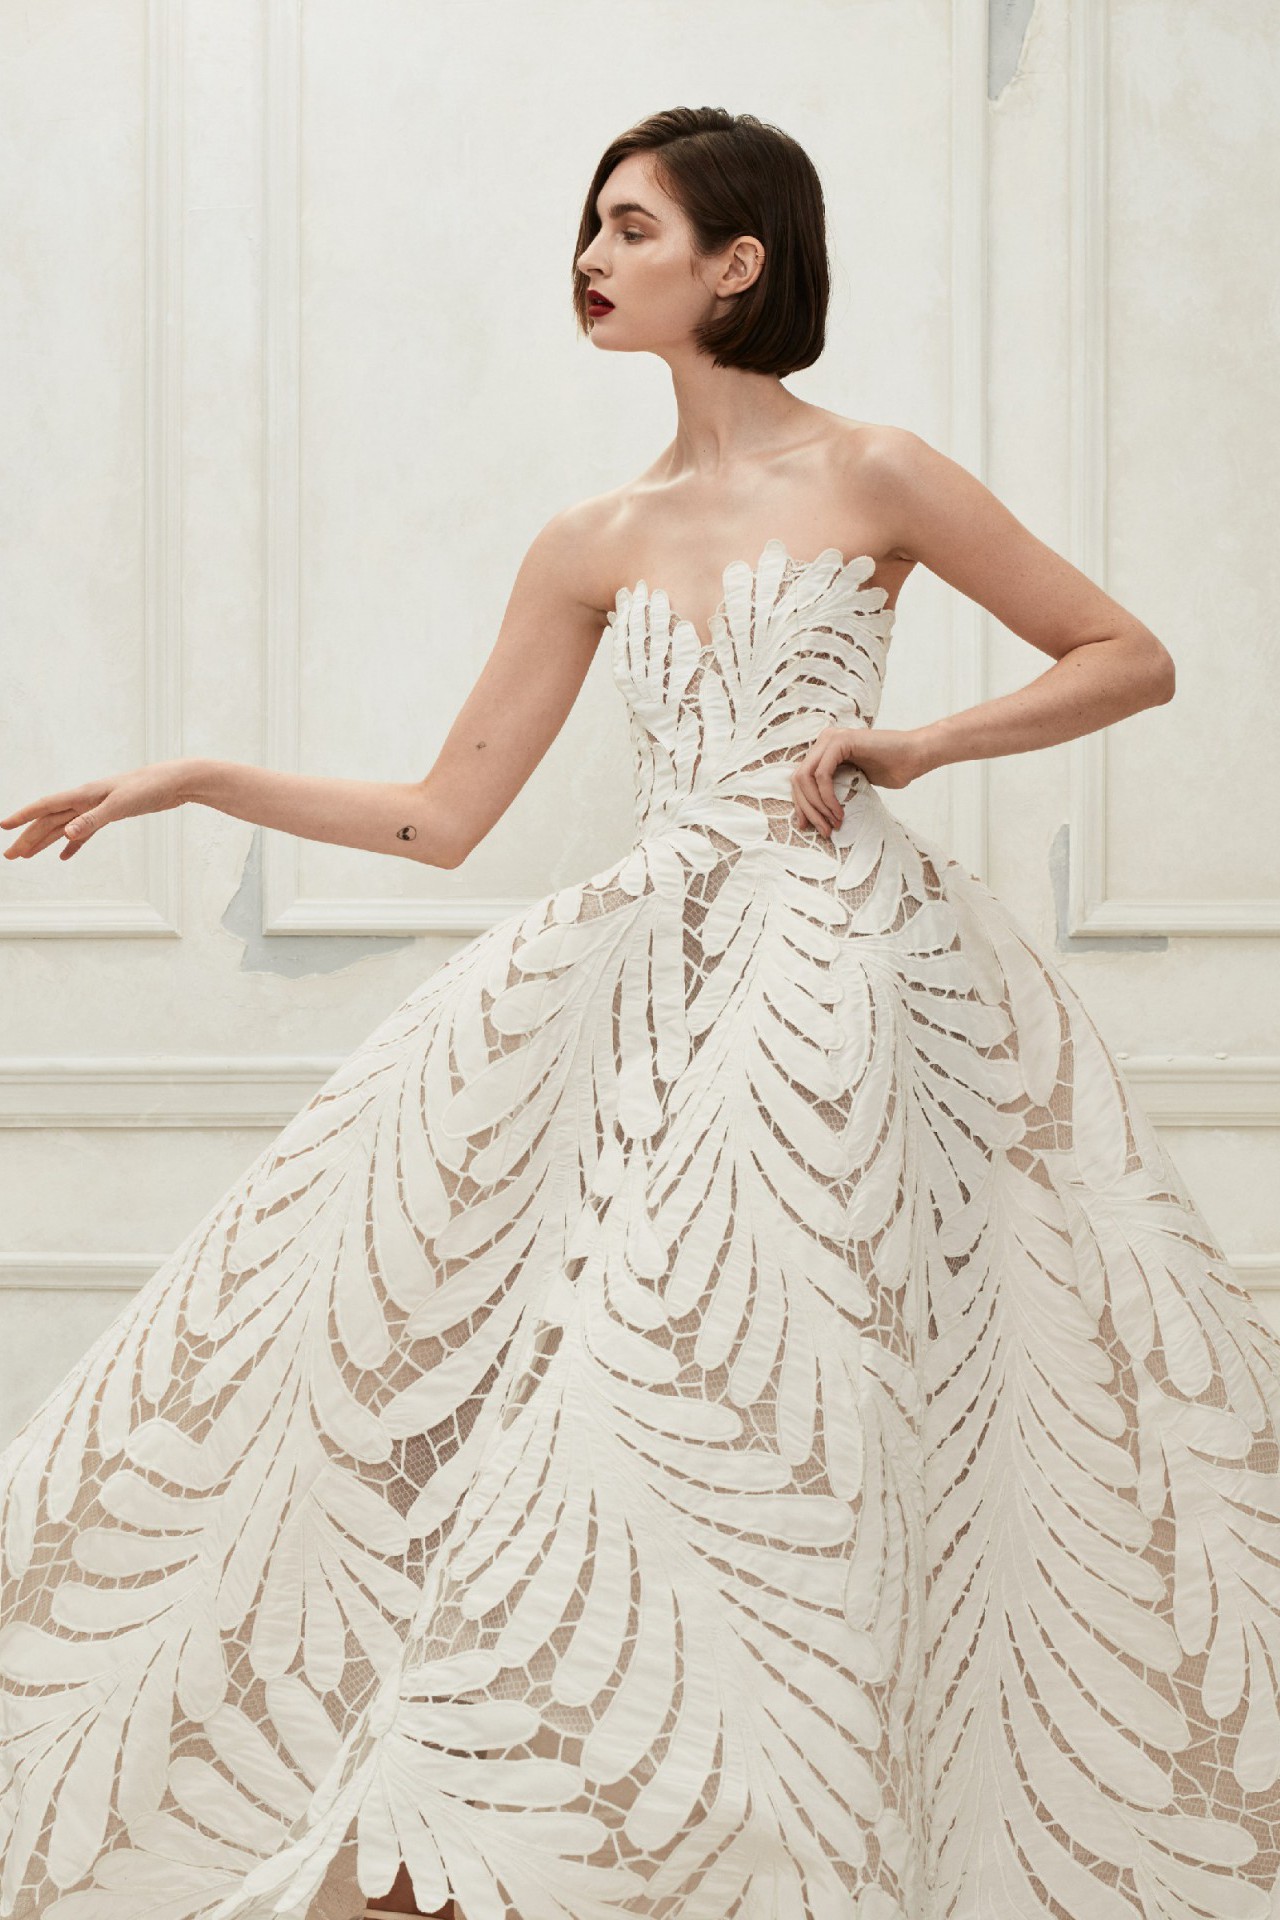 Oscar de la Renta embroidered fern print gown Second Hand Wedding Dress